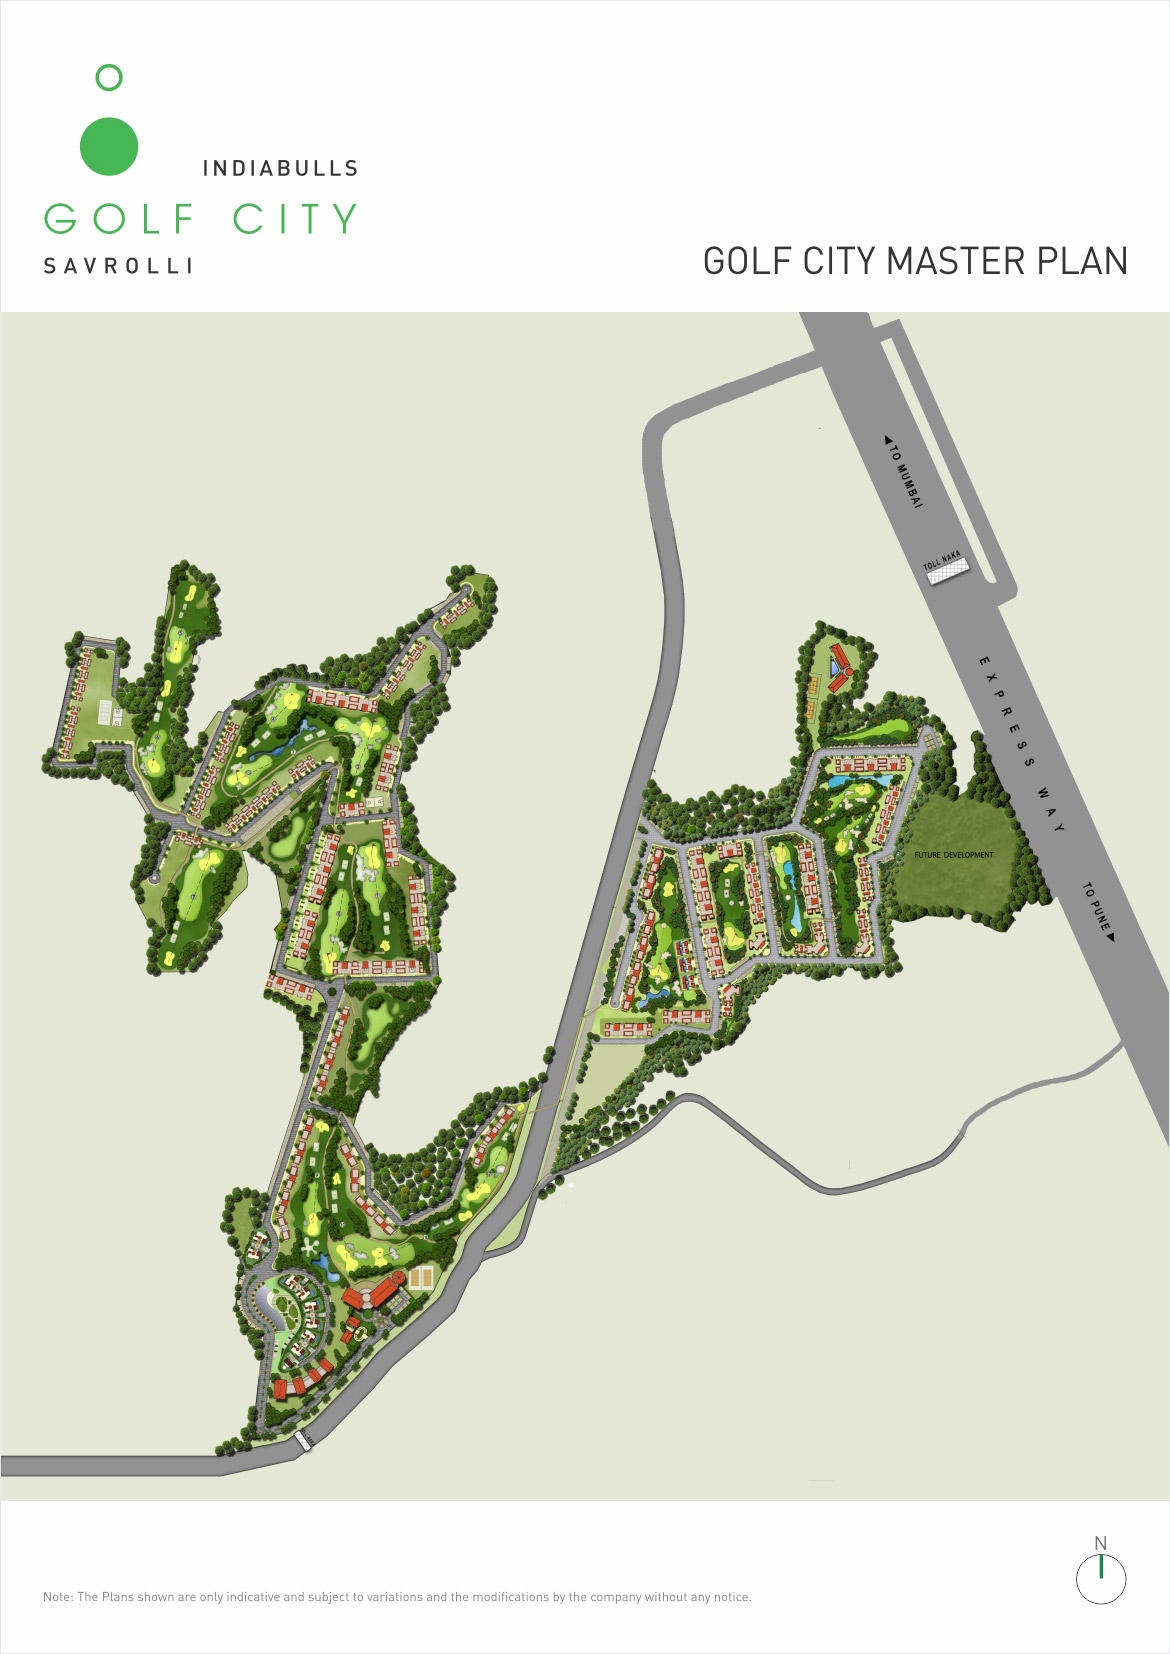 Indiabulls Golf City Master Plan